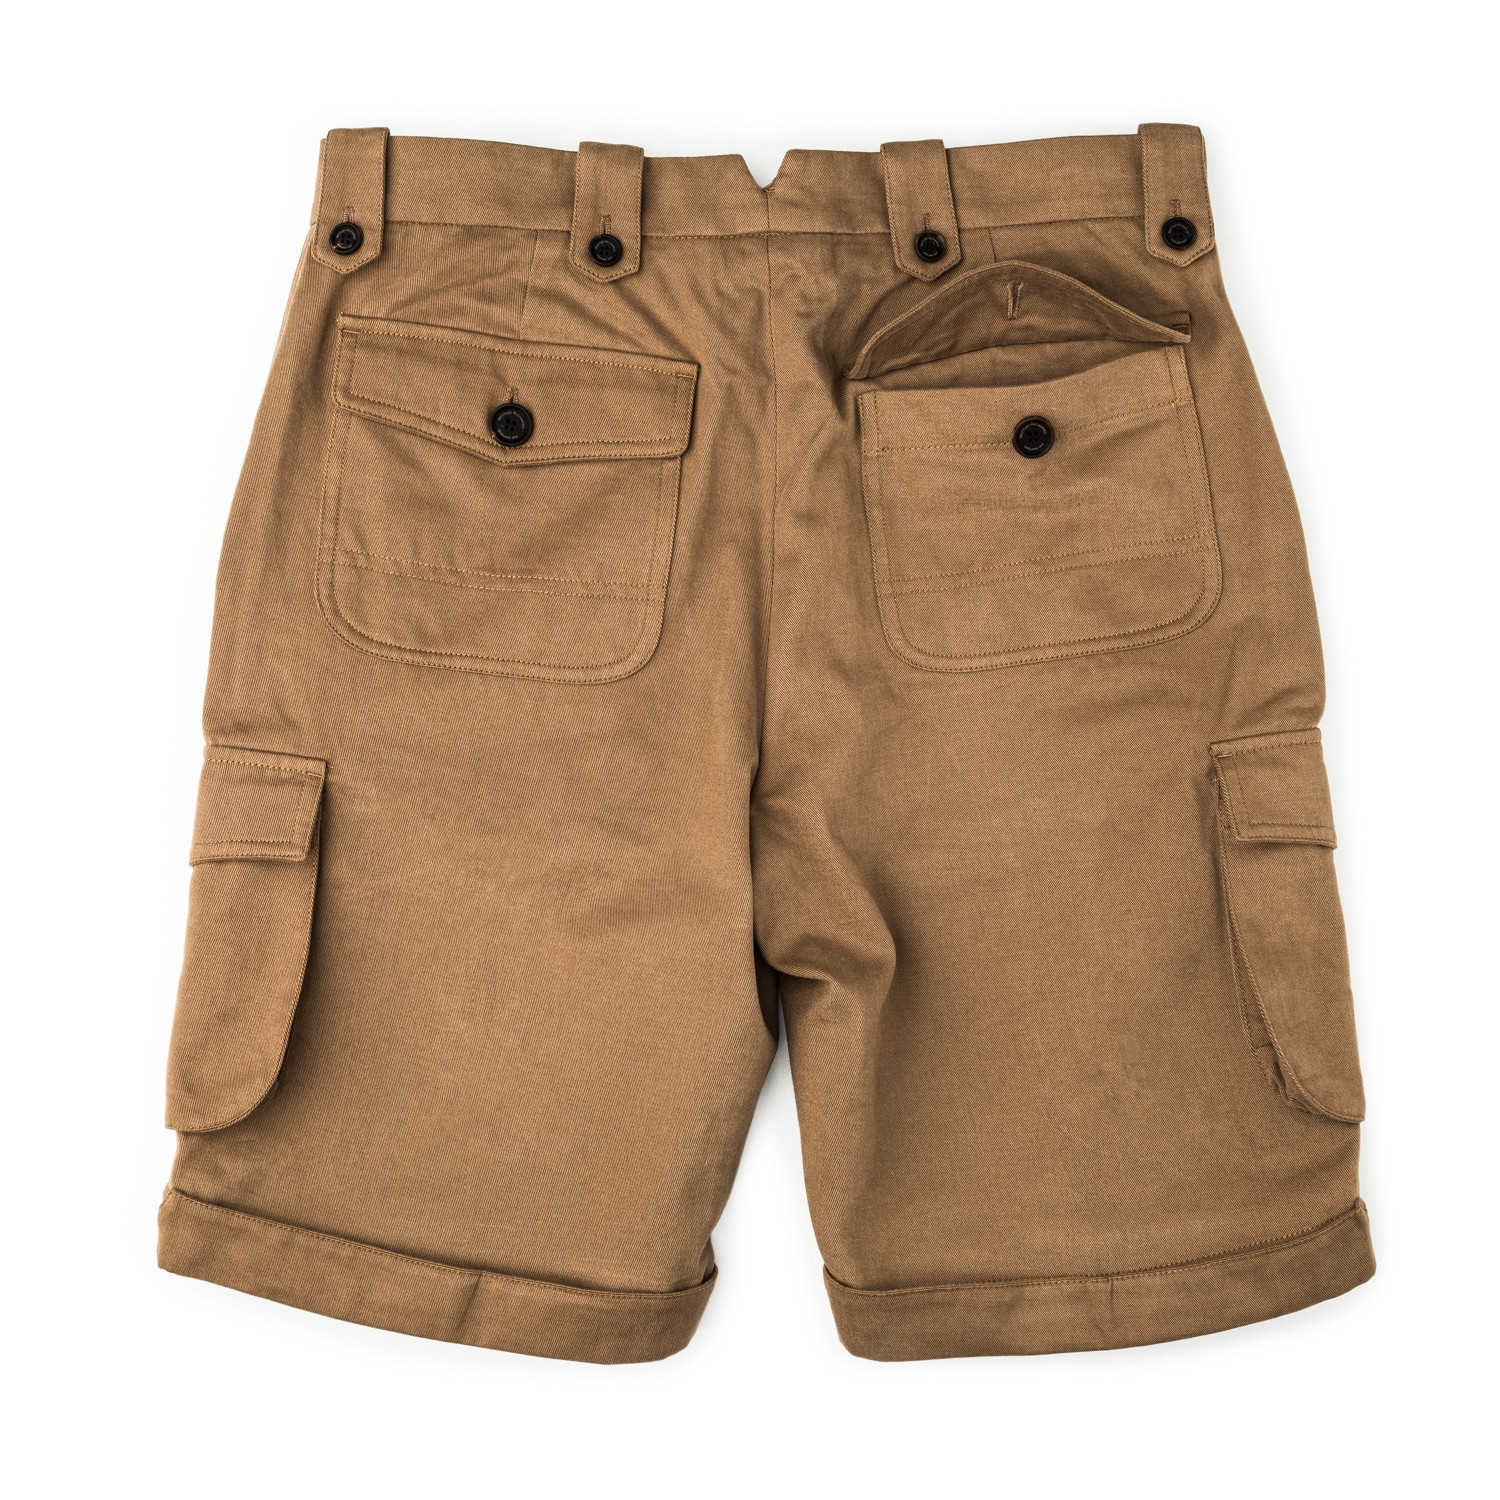 Westley Richards Safari Shorts in Fawn